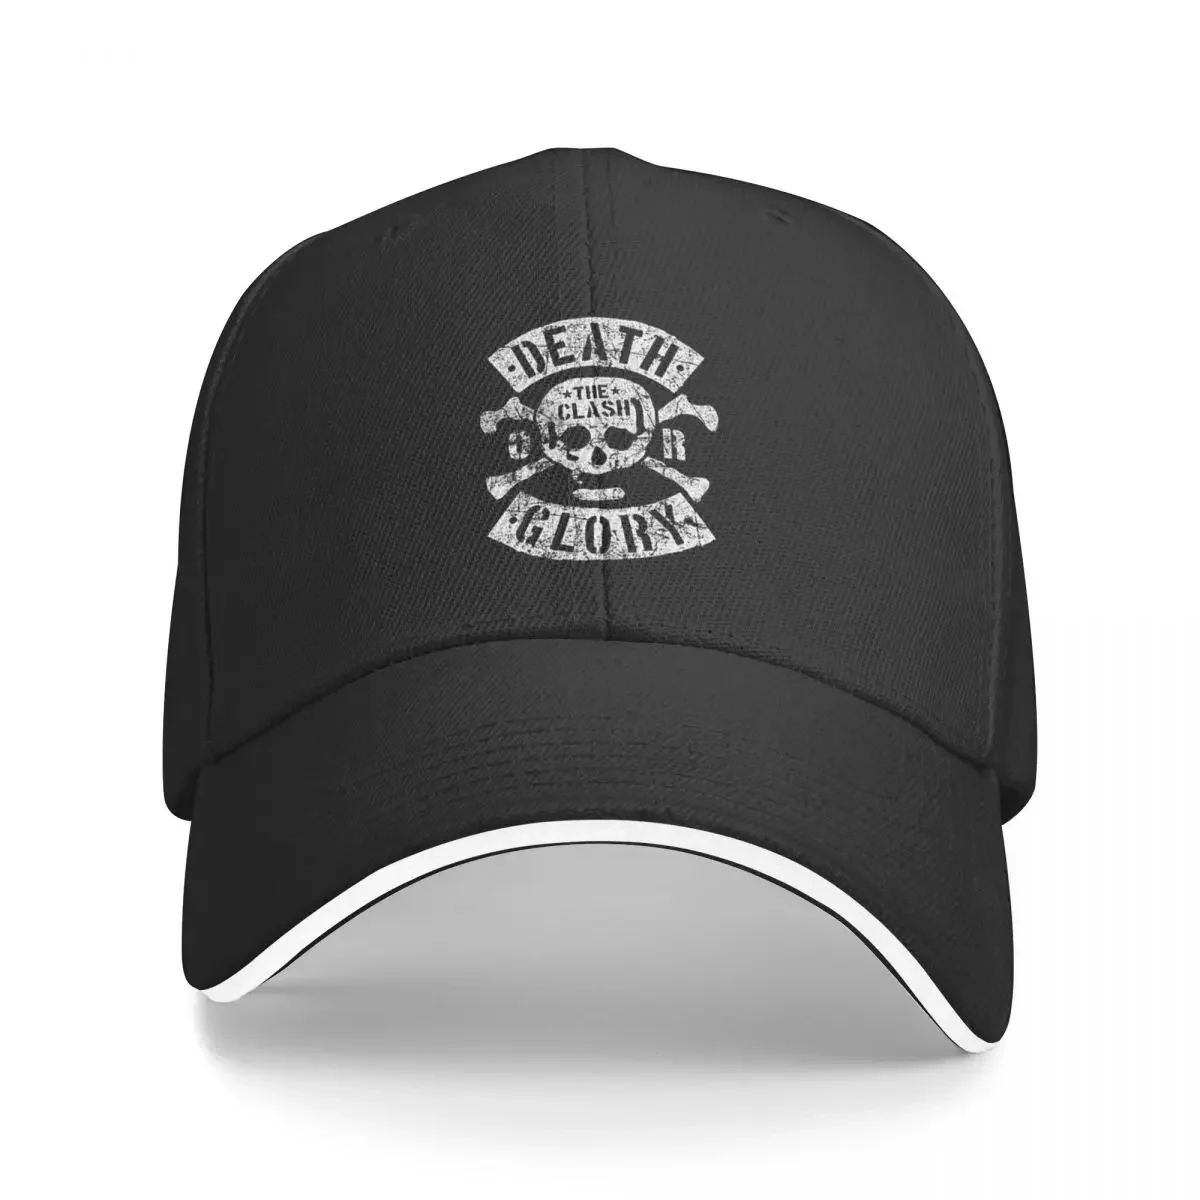 

zcvmn the design favorite Cap Baseball Cap Fishing caps Man cap Women's